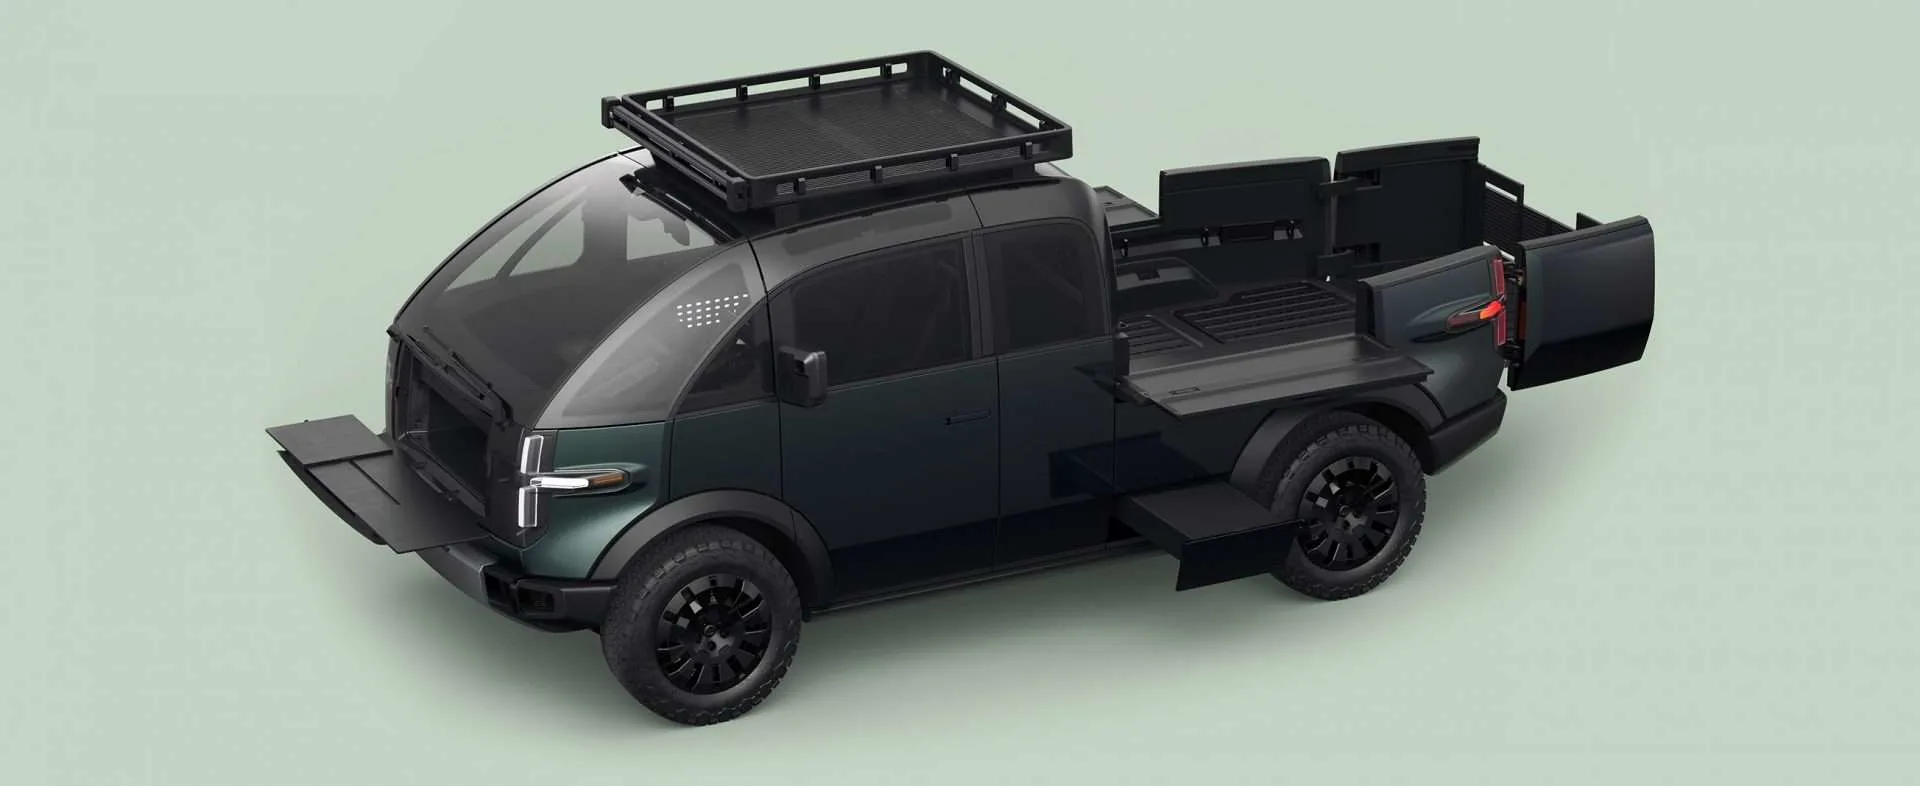 Conoo truck virtual model from the Canoo website